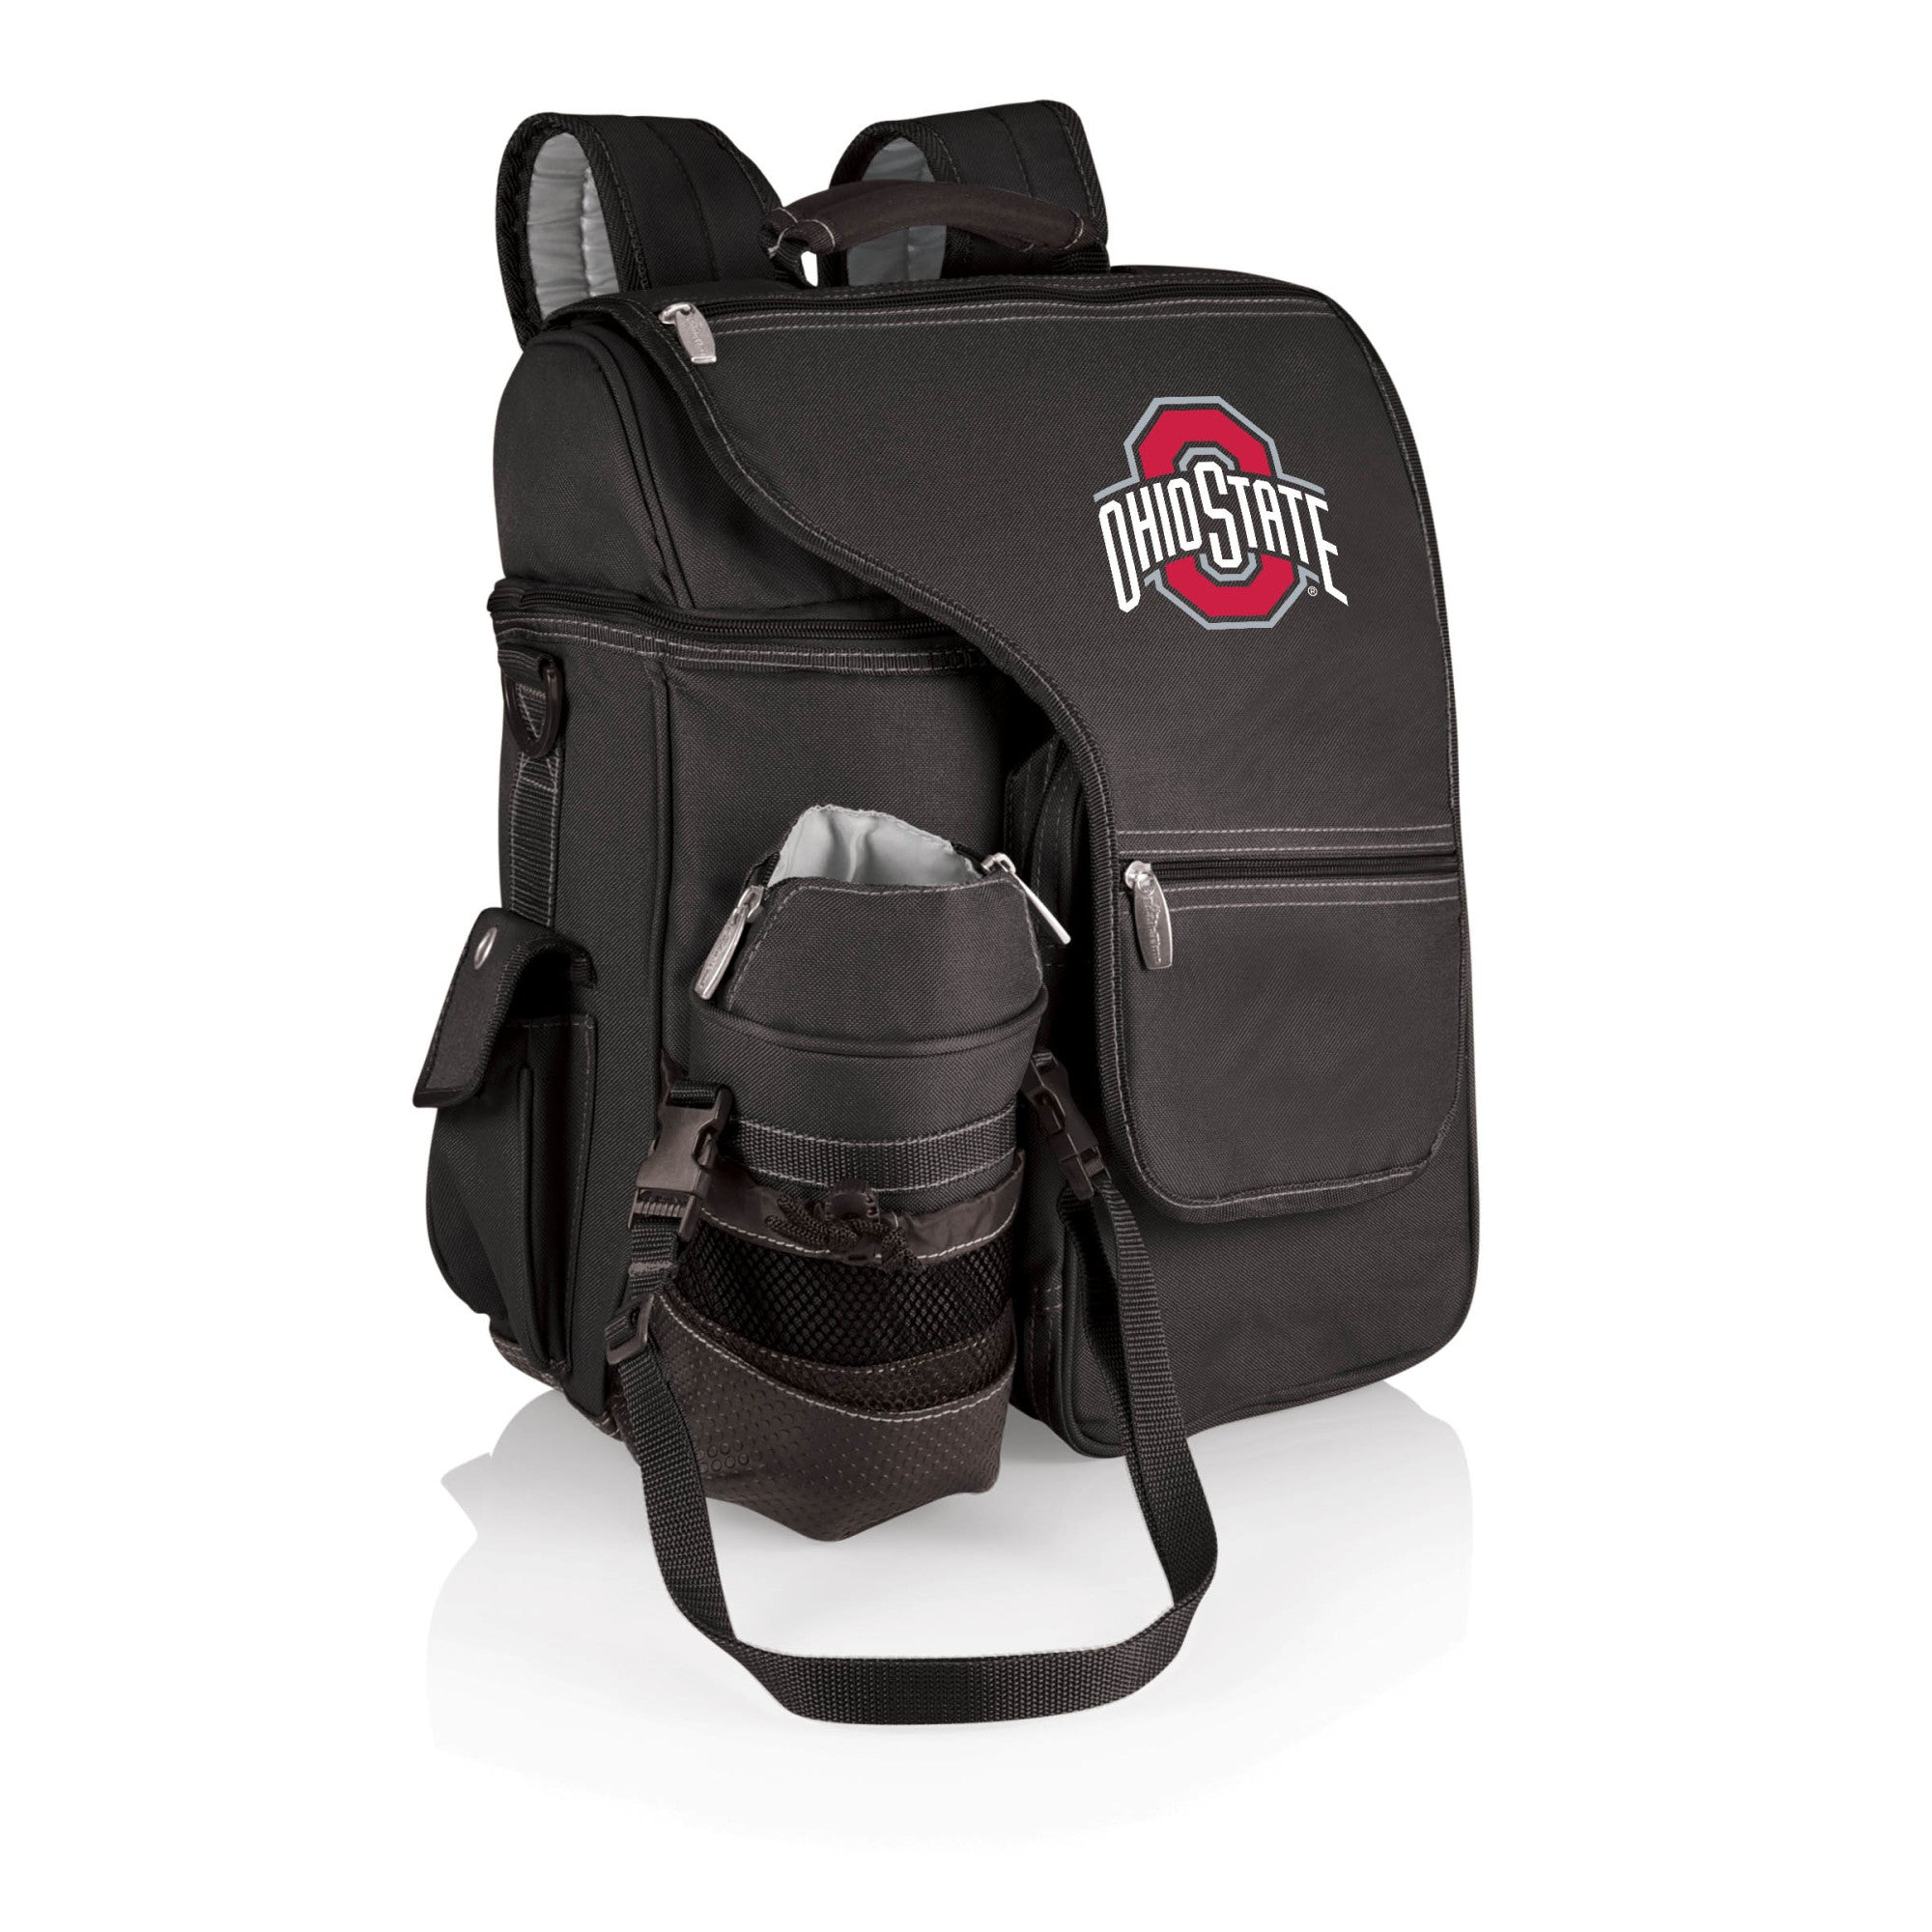 Ohio State Buckeyes - Turismo Travel Backpack Cooler